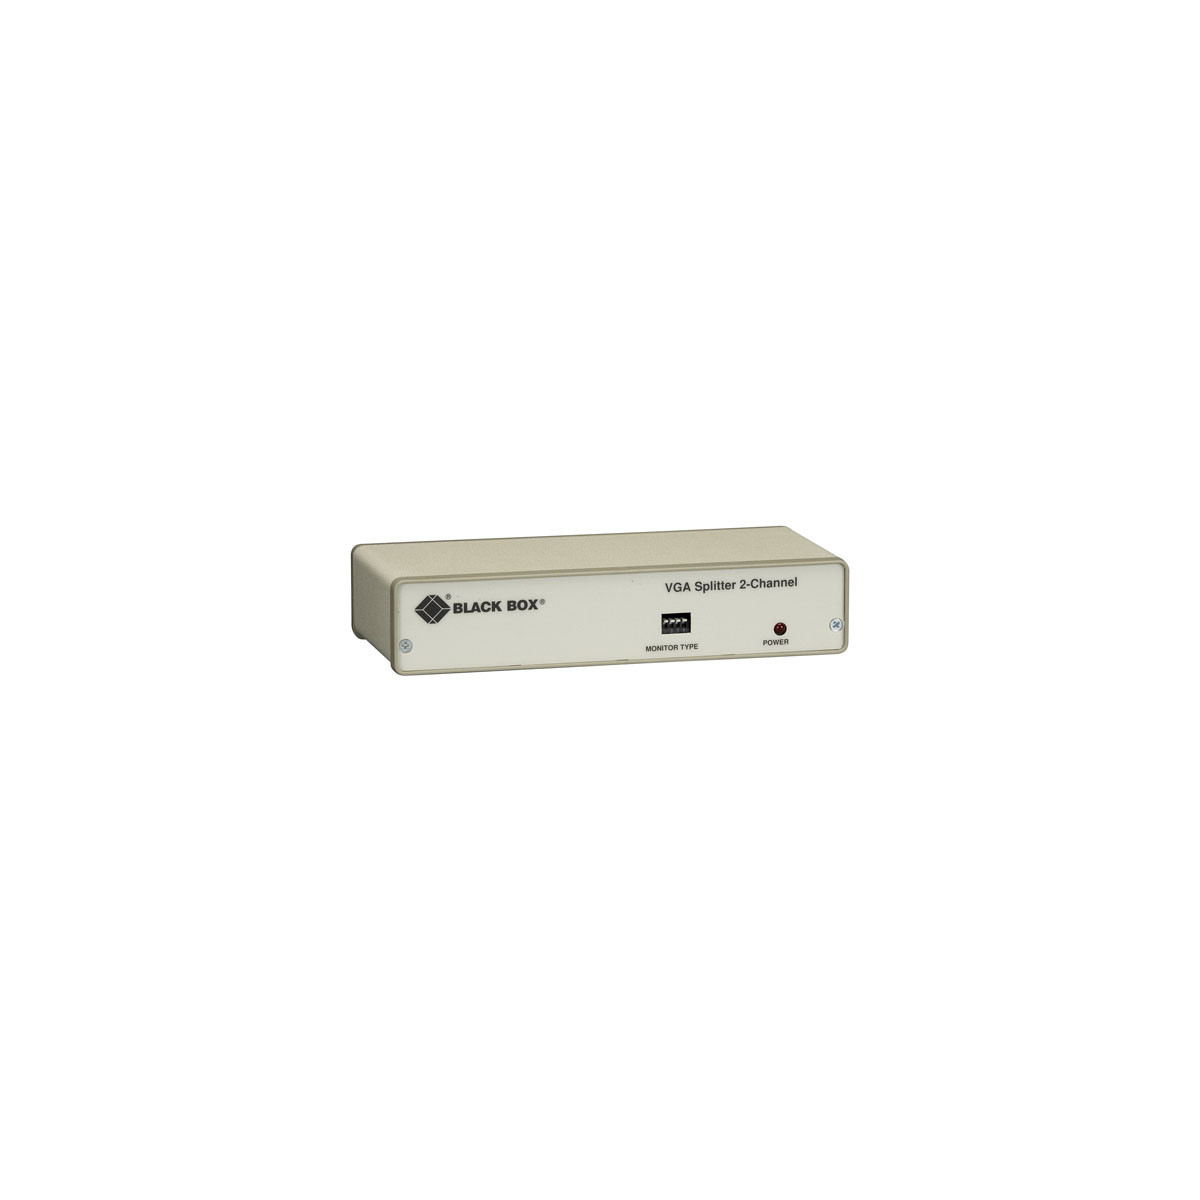 PANASONIC Proyector 1-Chip DLP Láser 4K UHD 5.200 lúmen. Óptica fija 1,45-2,92:1.Negro